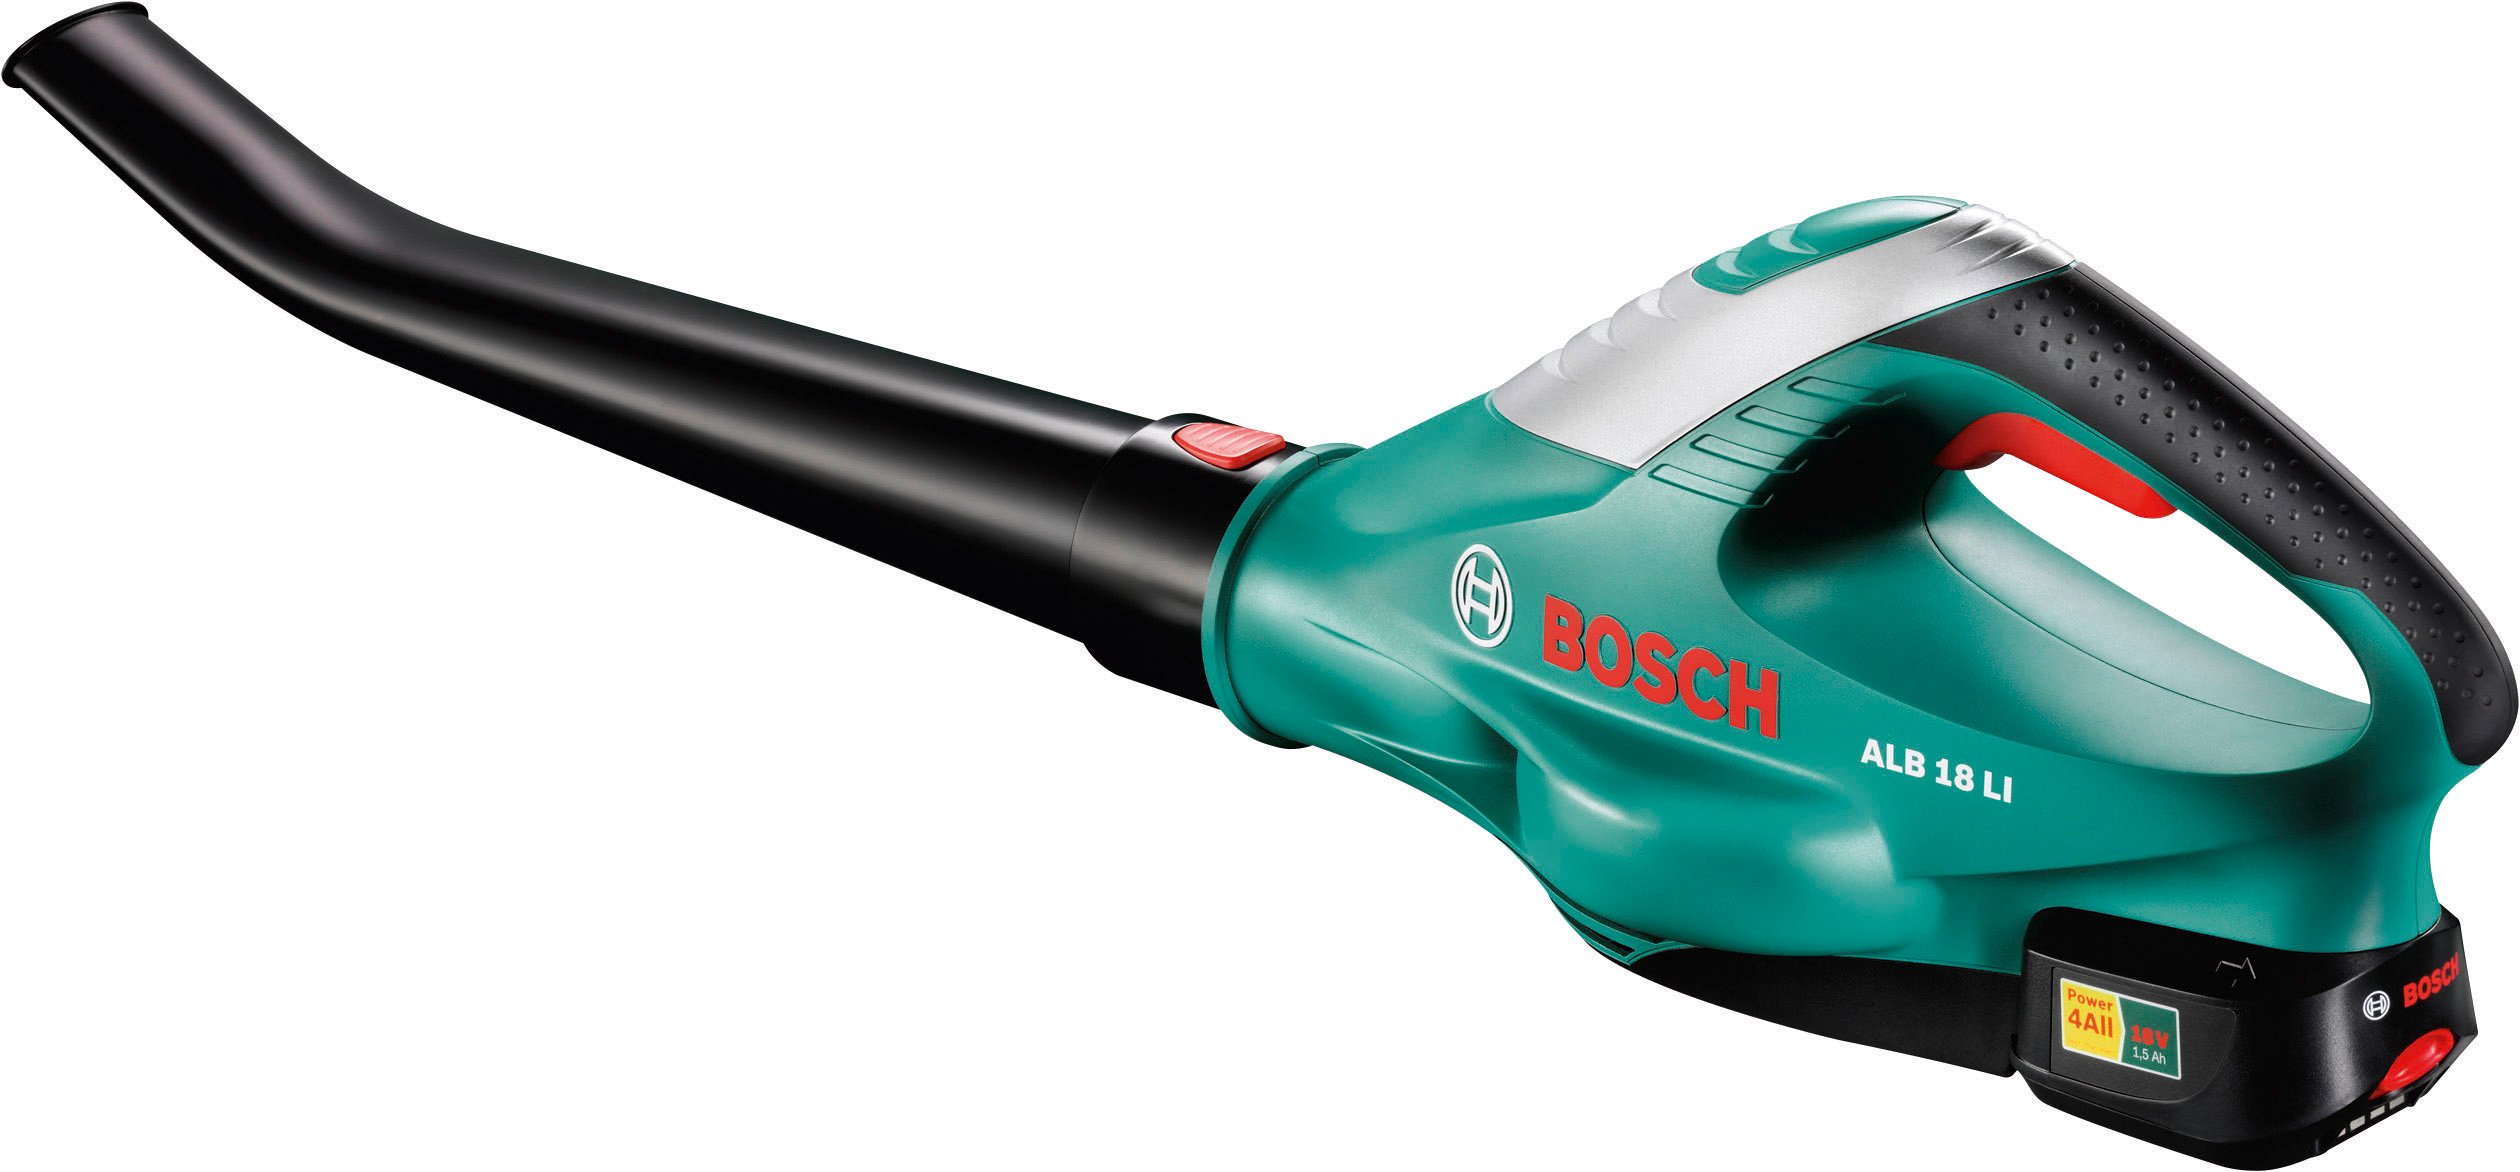 06008A0500 Black Charger Battery Green 18 voltsV Bosch DIY Battery Leaf Blower ALB 18 Li